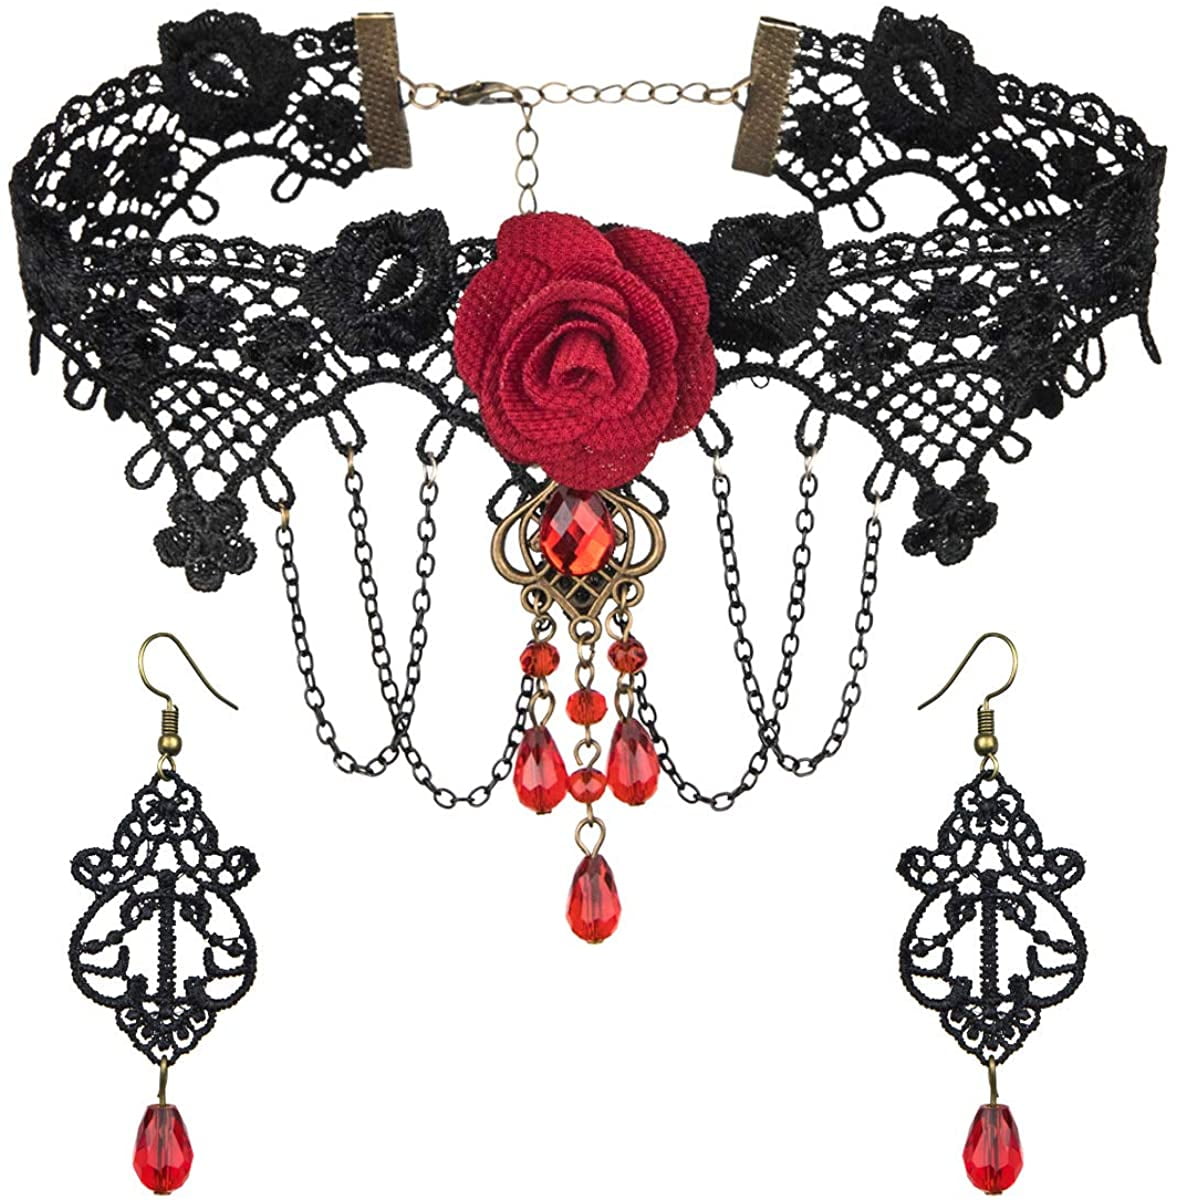 Vintage Gothic Color Lolita Lace Choker Collar Necklace Jewelry Retro Fashion